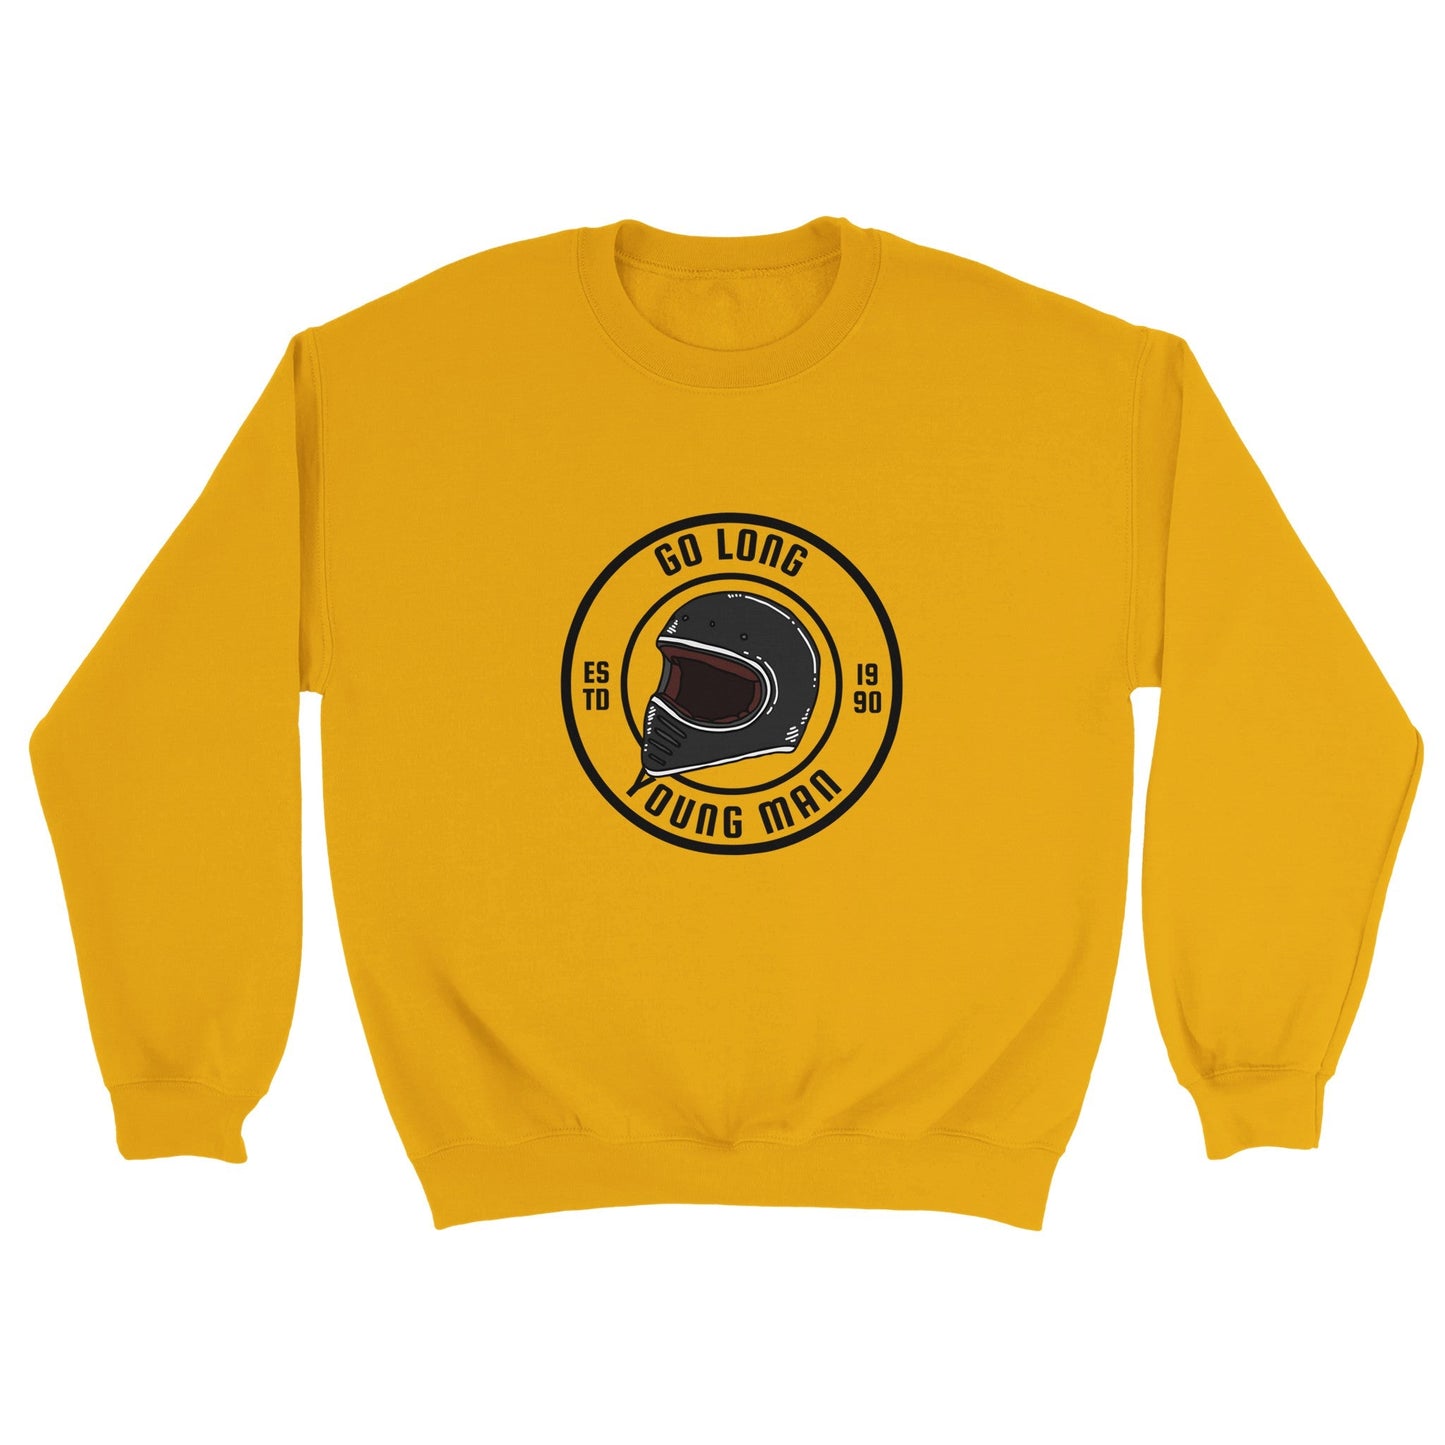 Classic Unisex Crewneck Sweatshirt - Go Long Young Man - The Vandi Company